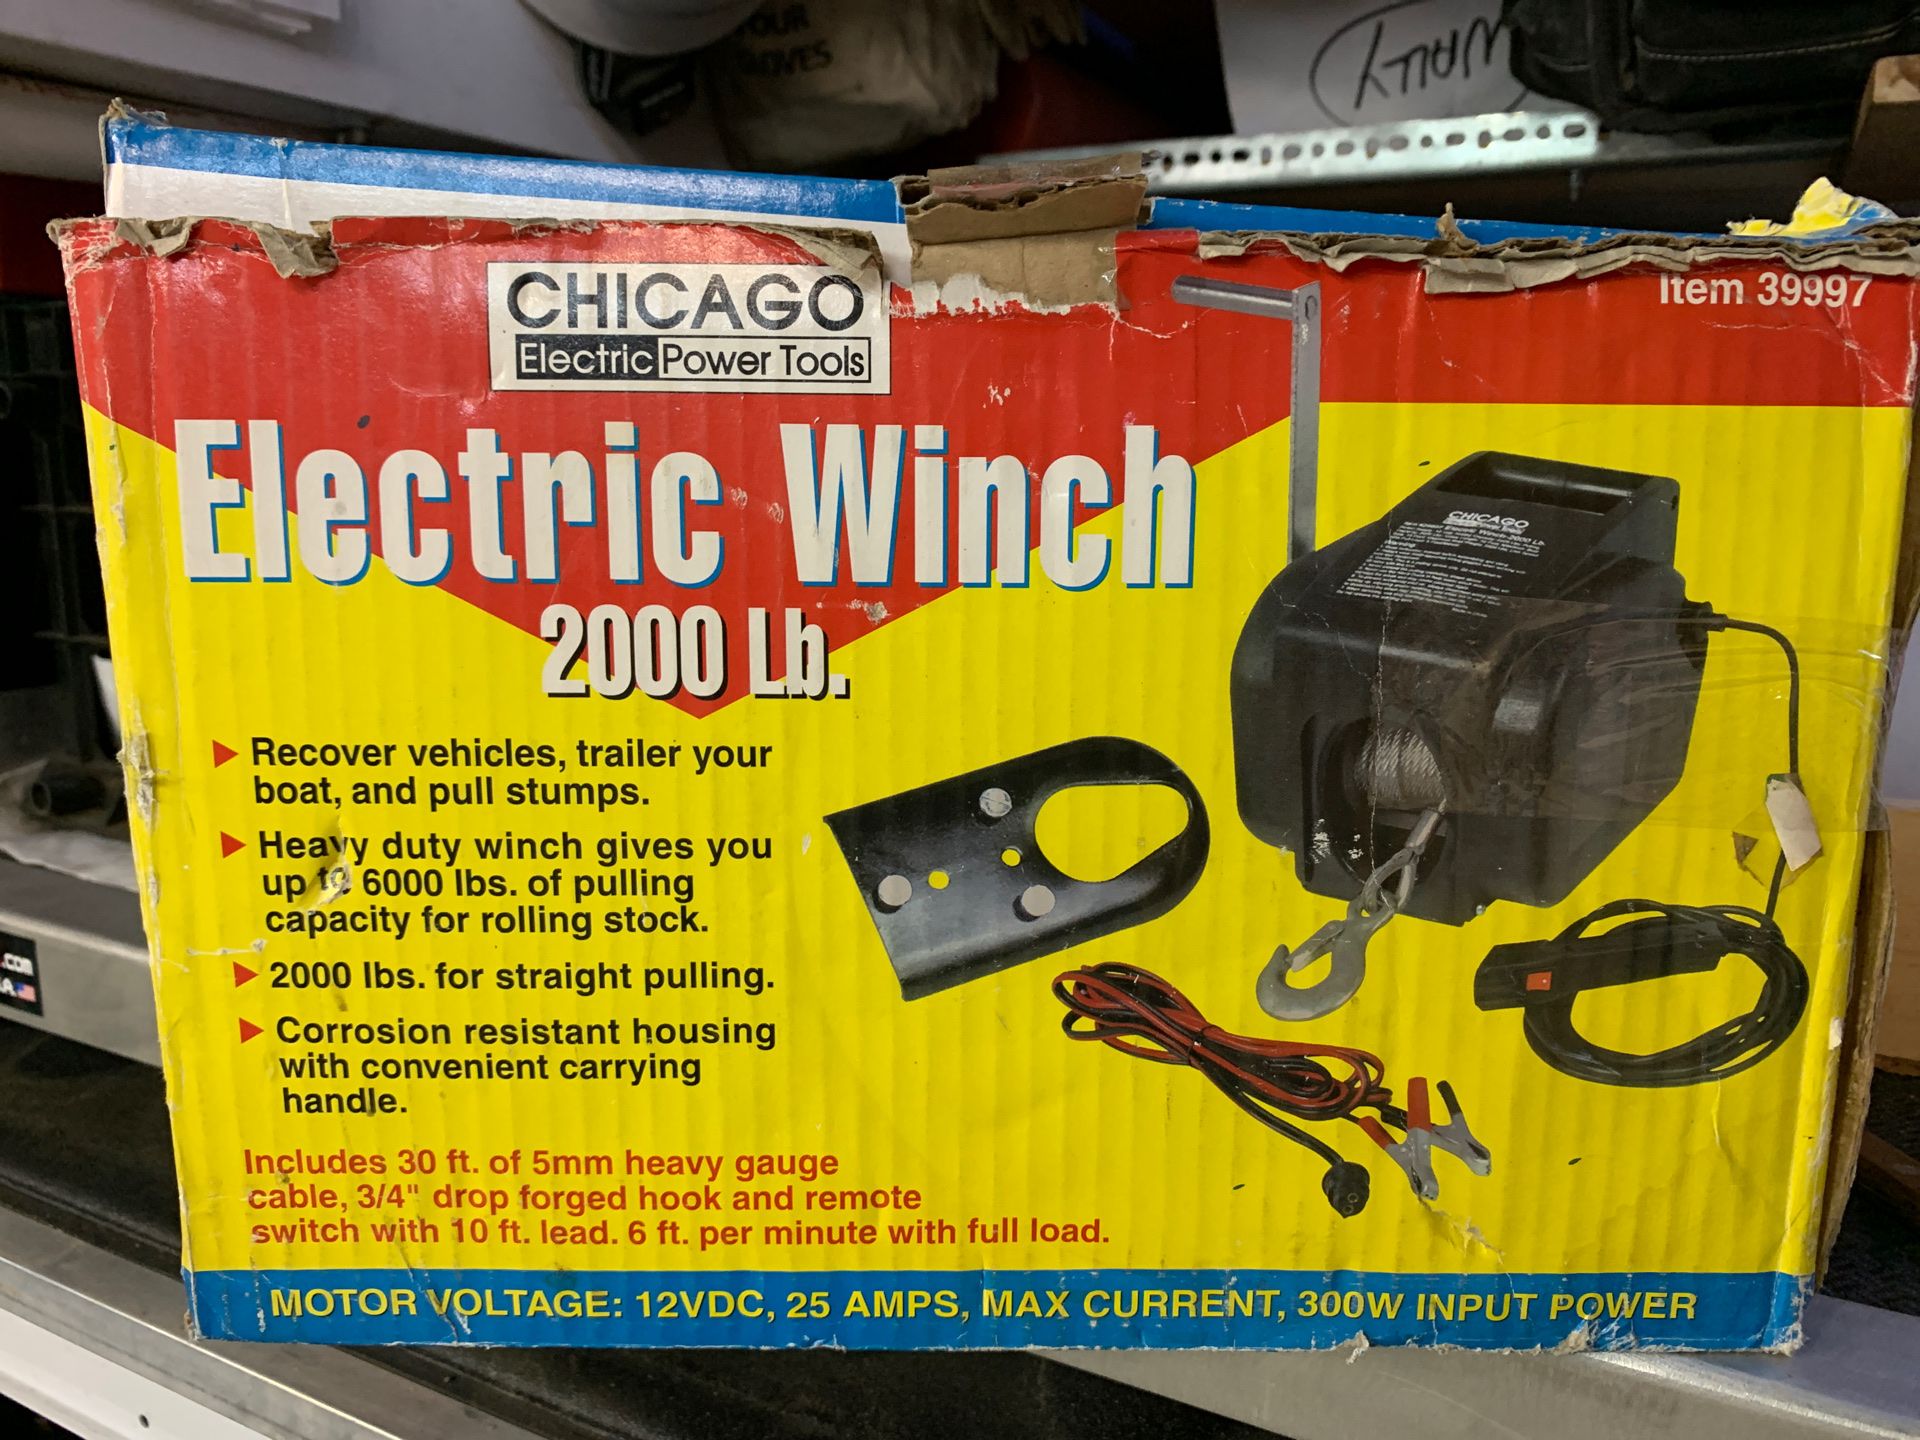 Chicago Winch 2000 lb $30